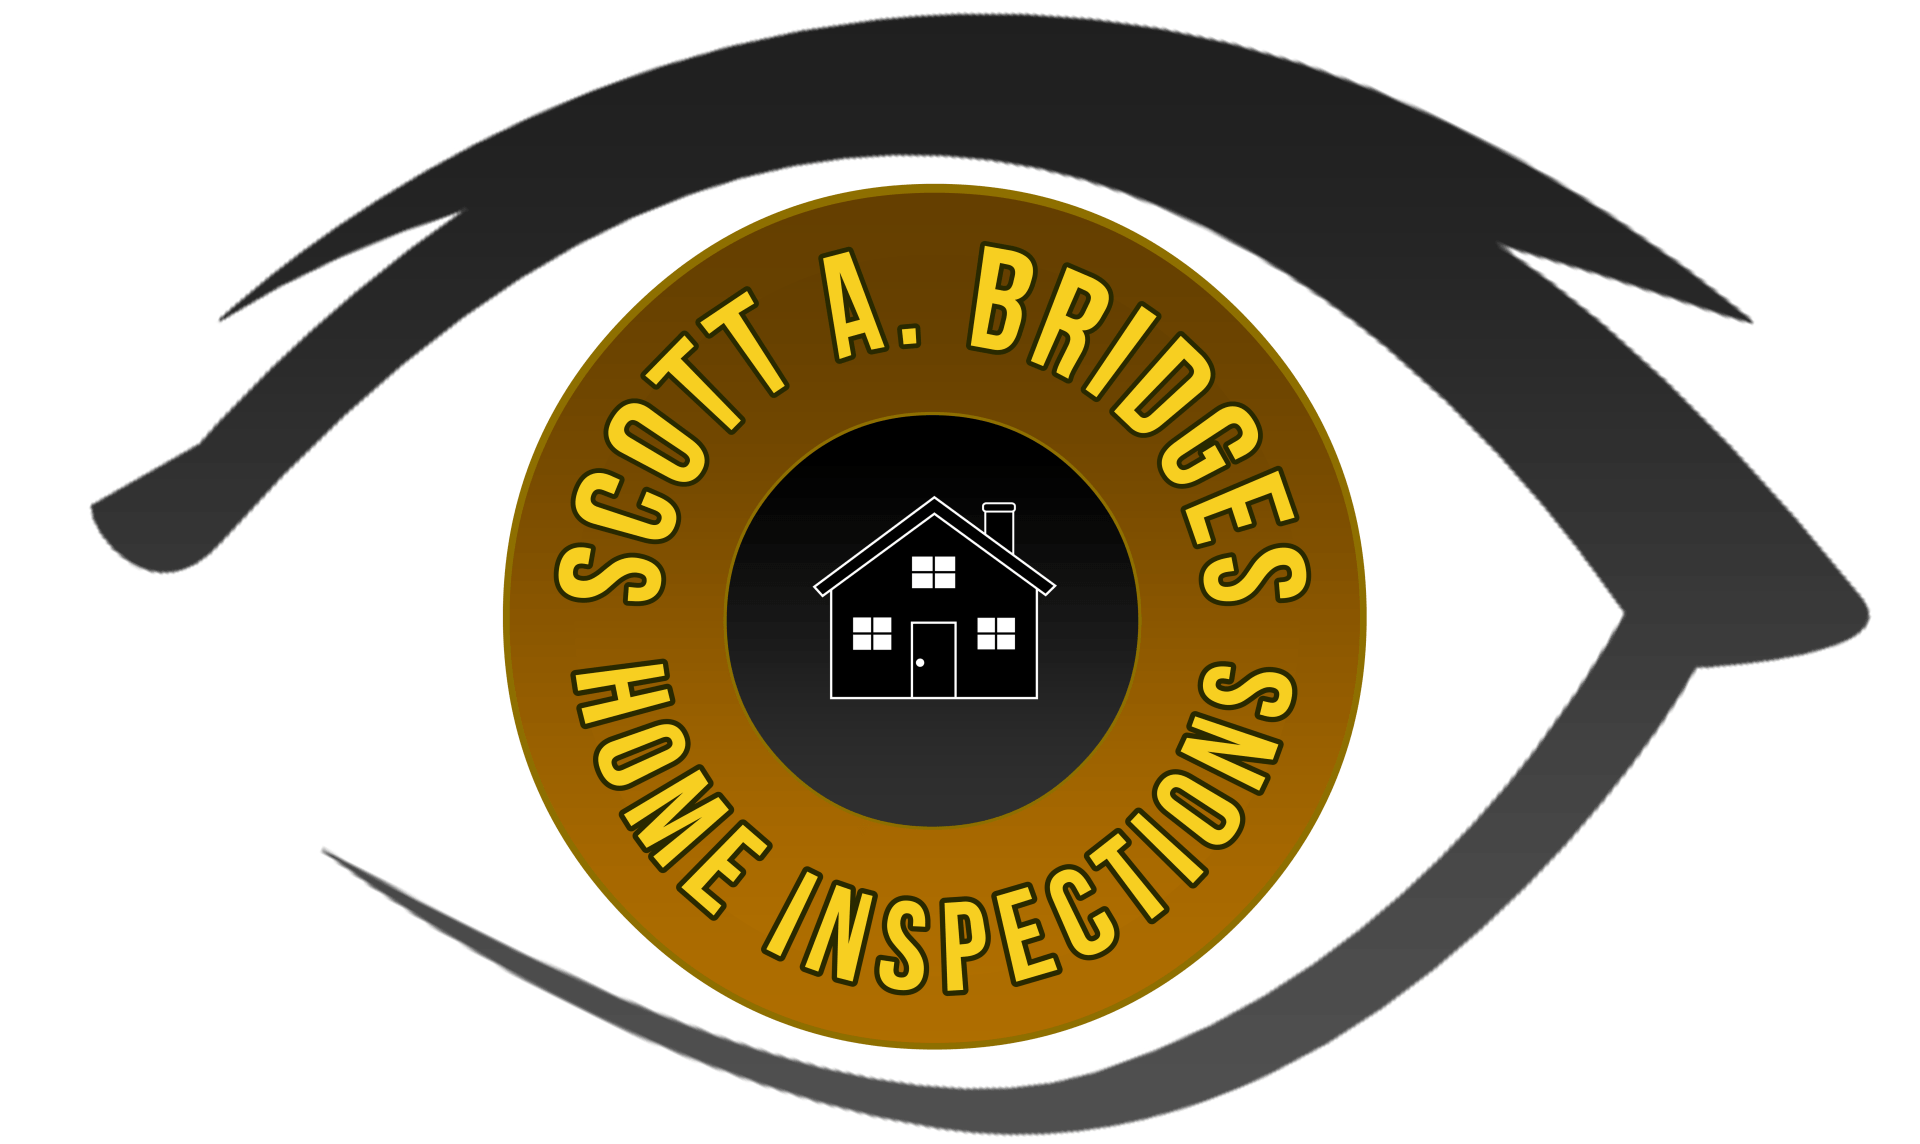 Scott A. Bridges Home Inspections Logo